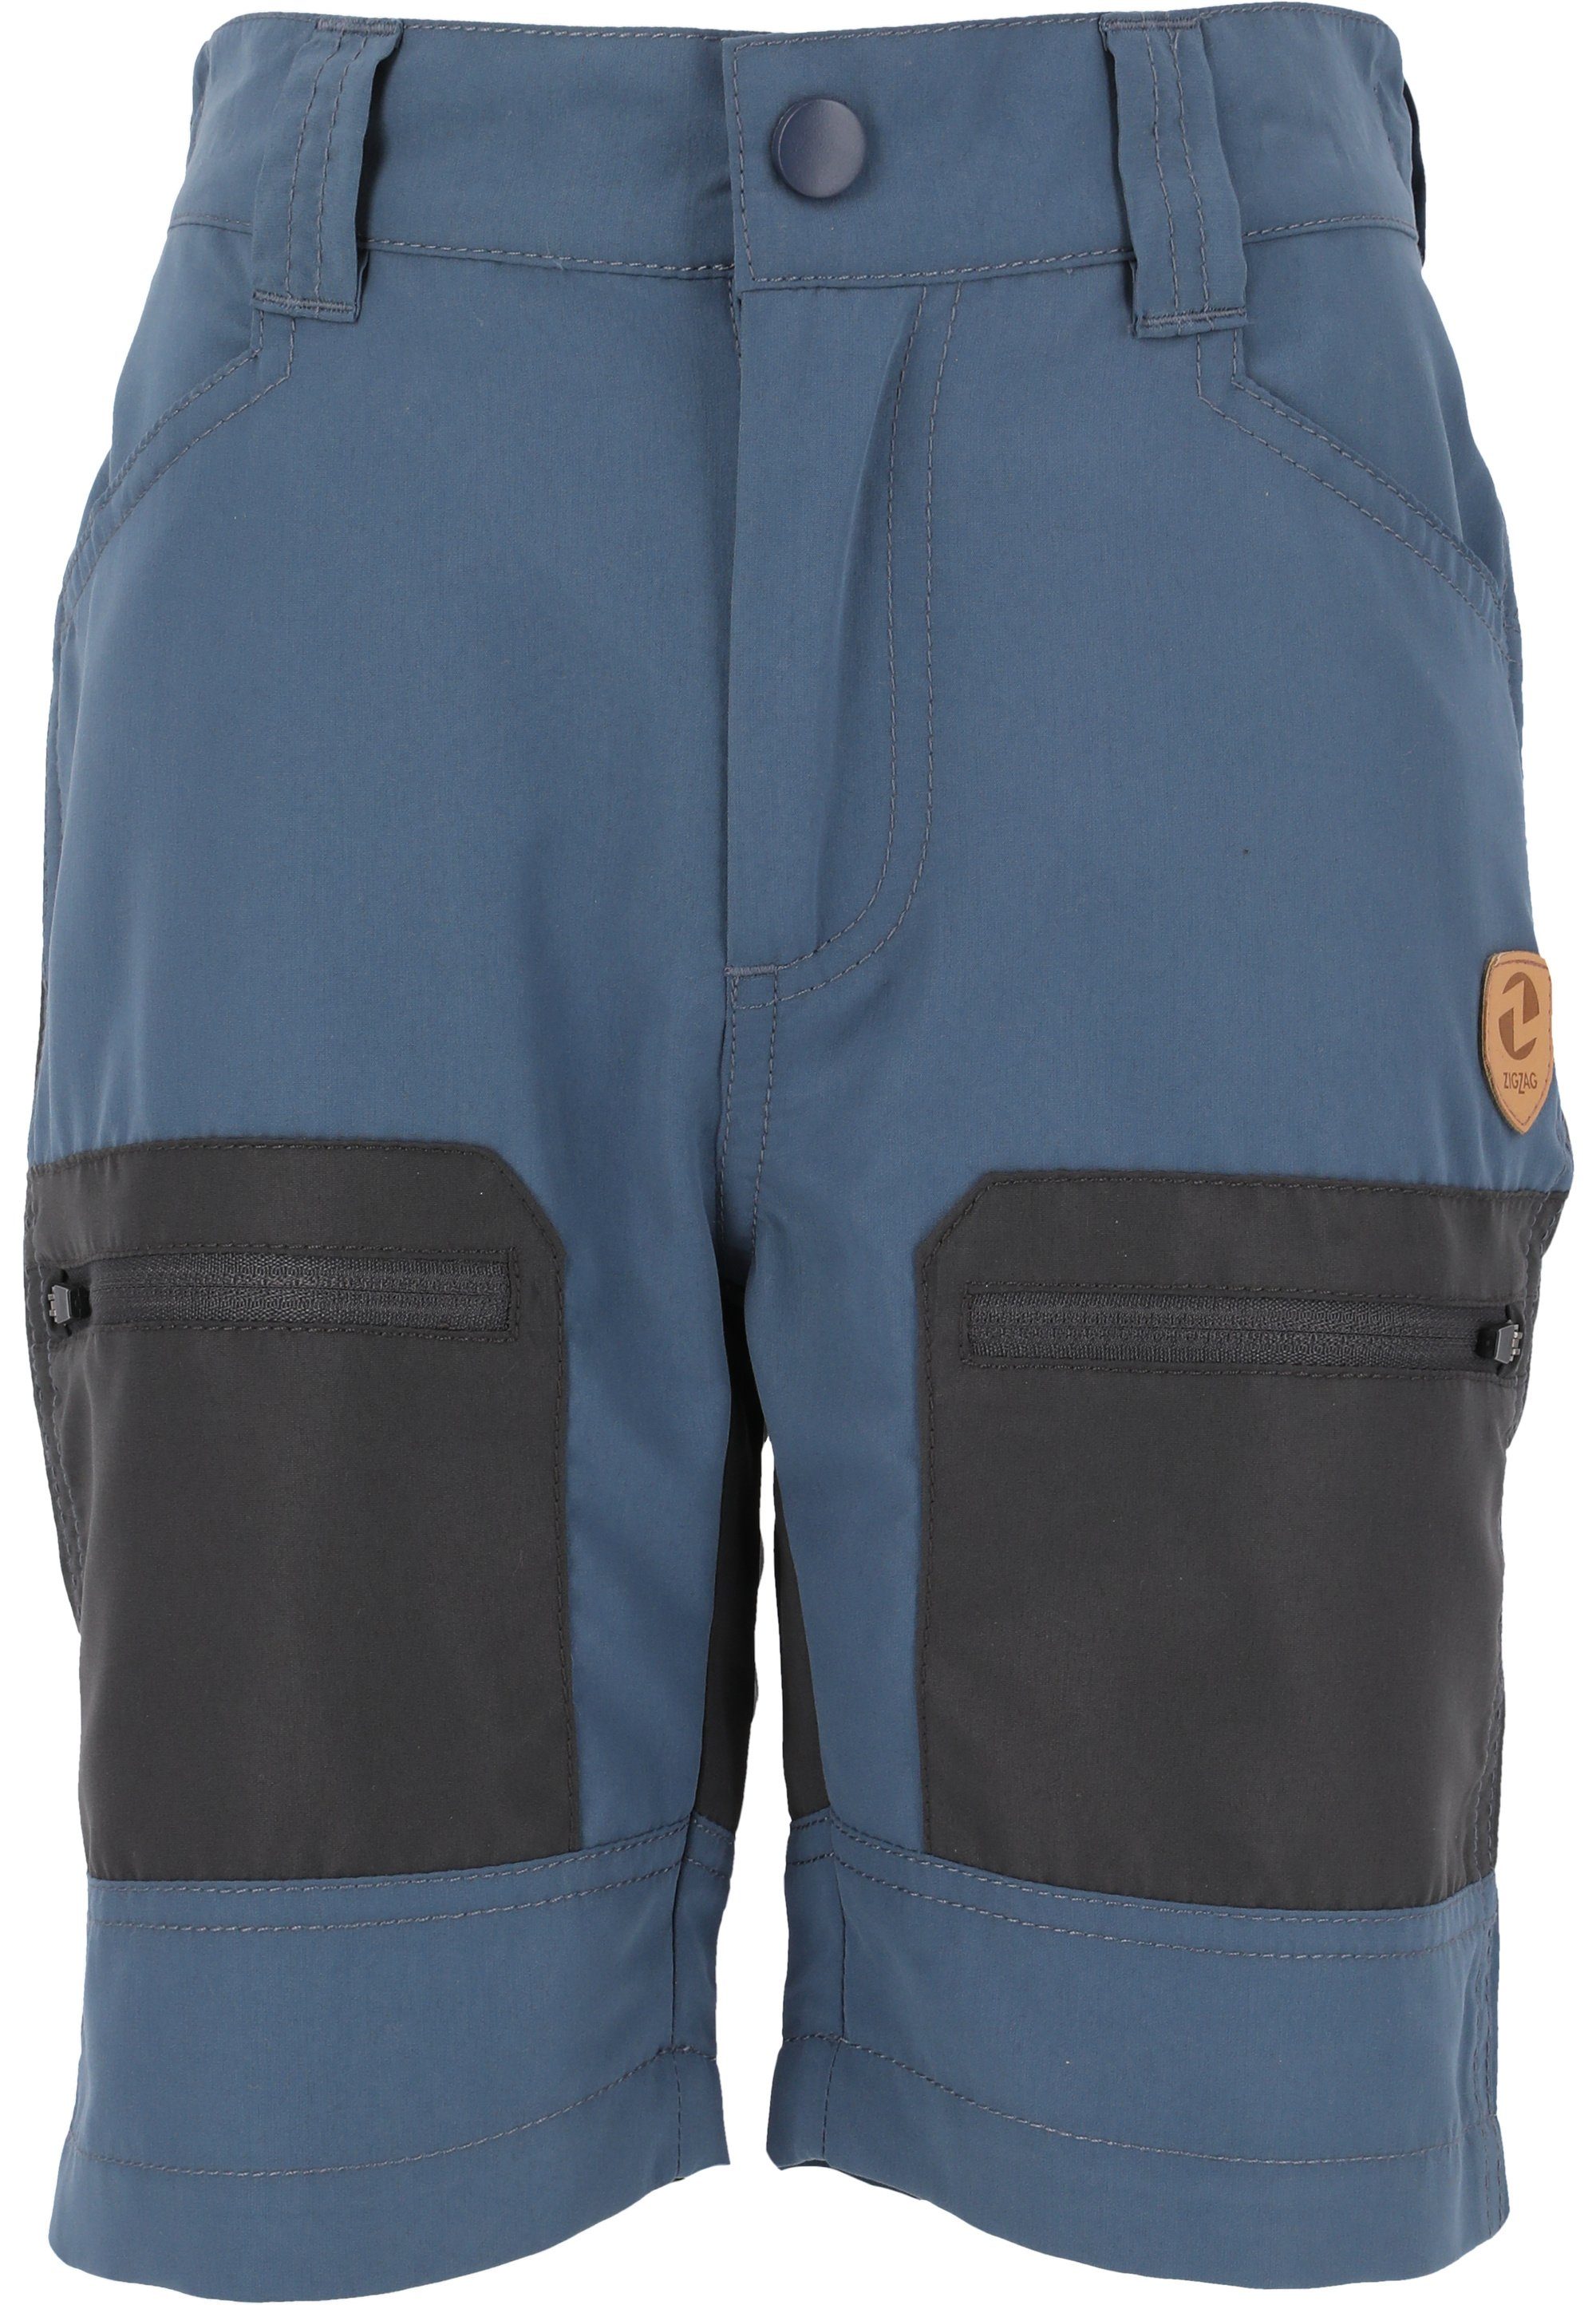 ZIGZAG Shorts Atlantic aus robustem Material blau-schwarz | Sportshorts